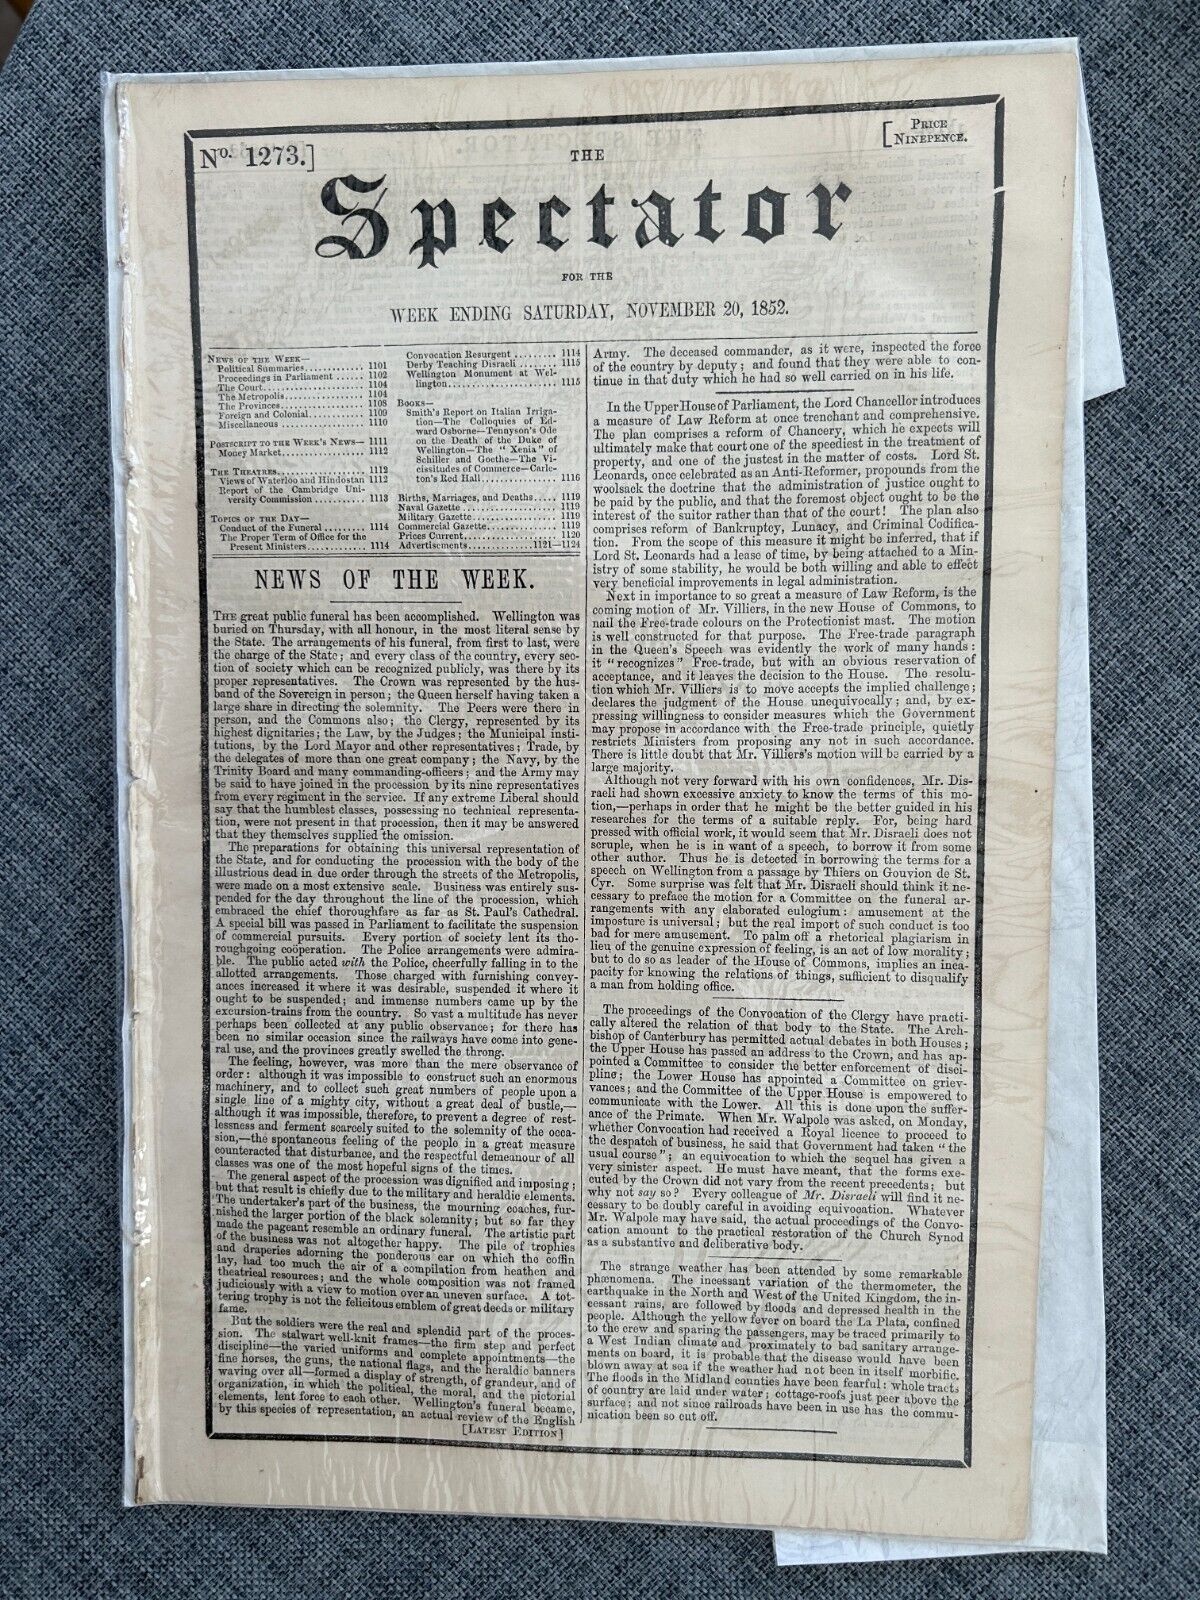 THE SPECTATOR 20 MAR 1852 DUKE OF WELLINGTON FUNERAL ORIGINAL NEWSPAPER